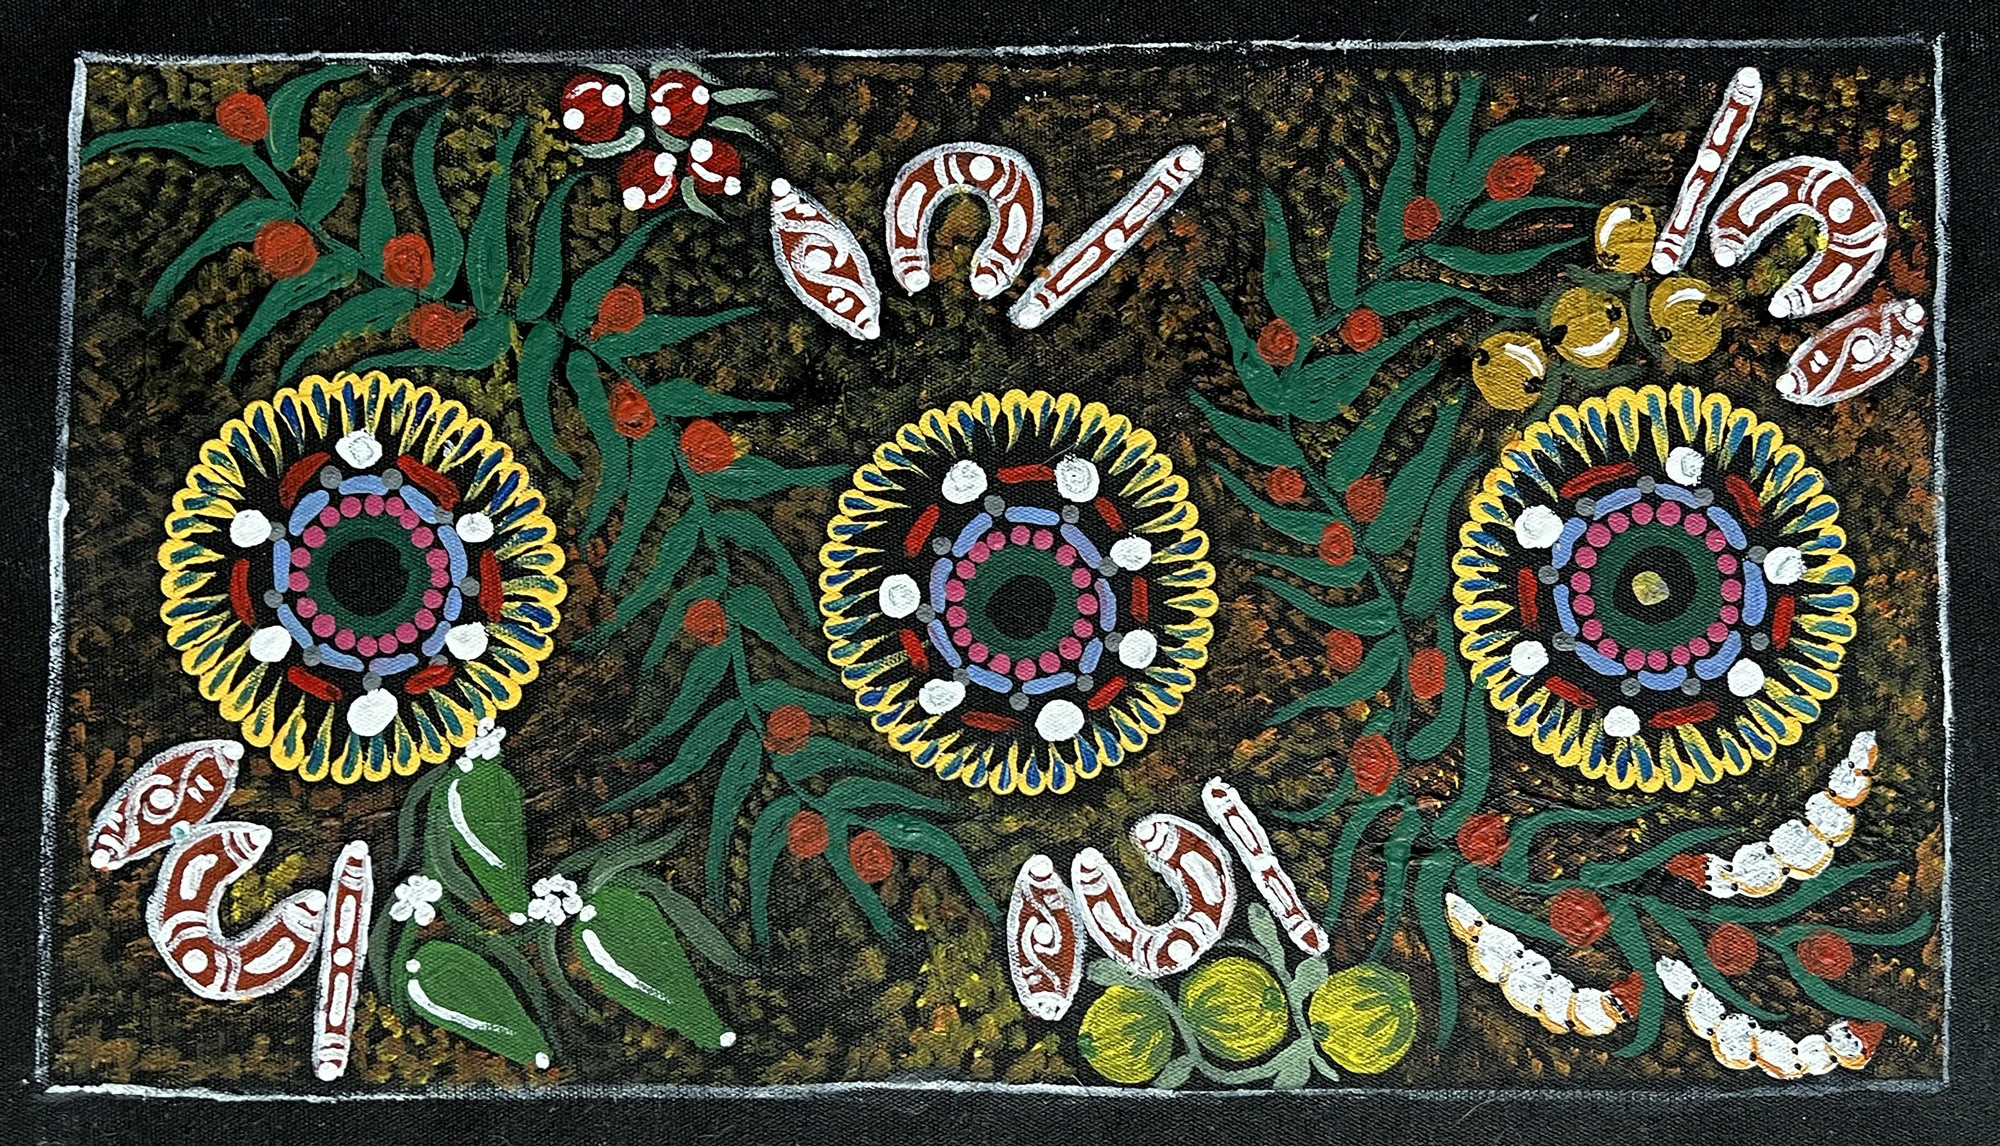 Aboriginal painted artwork titled 